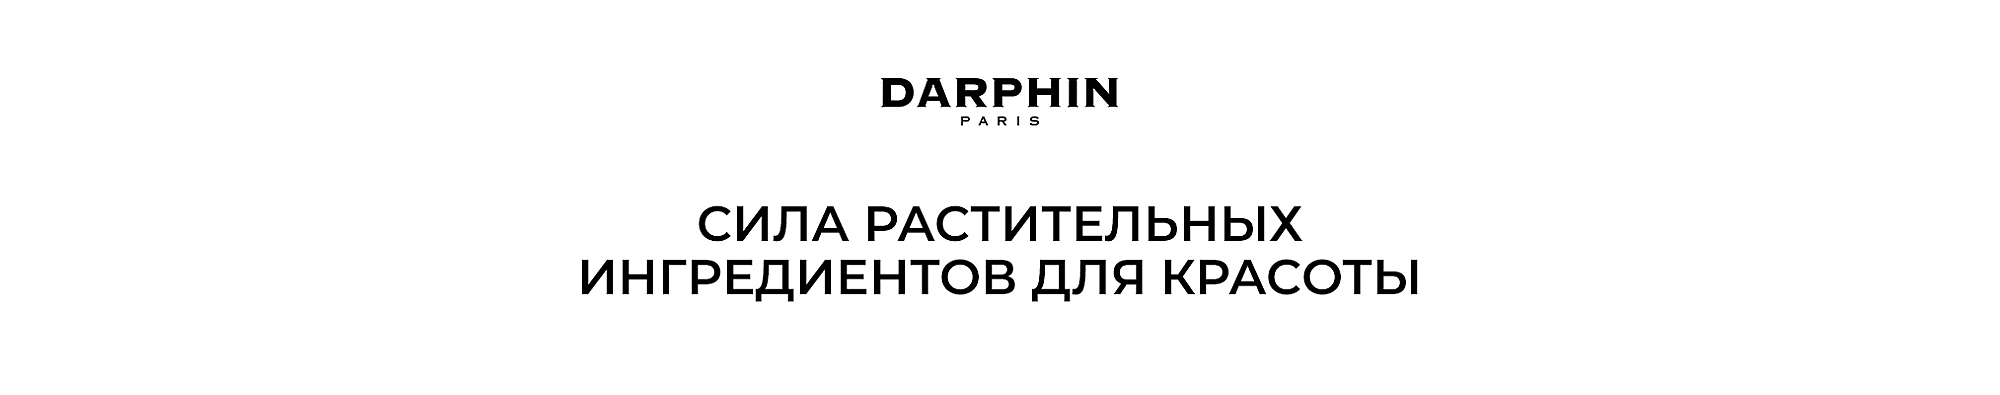 Darphin